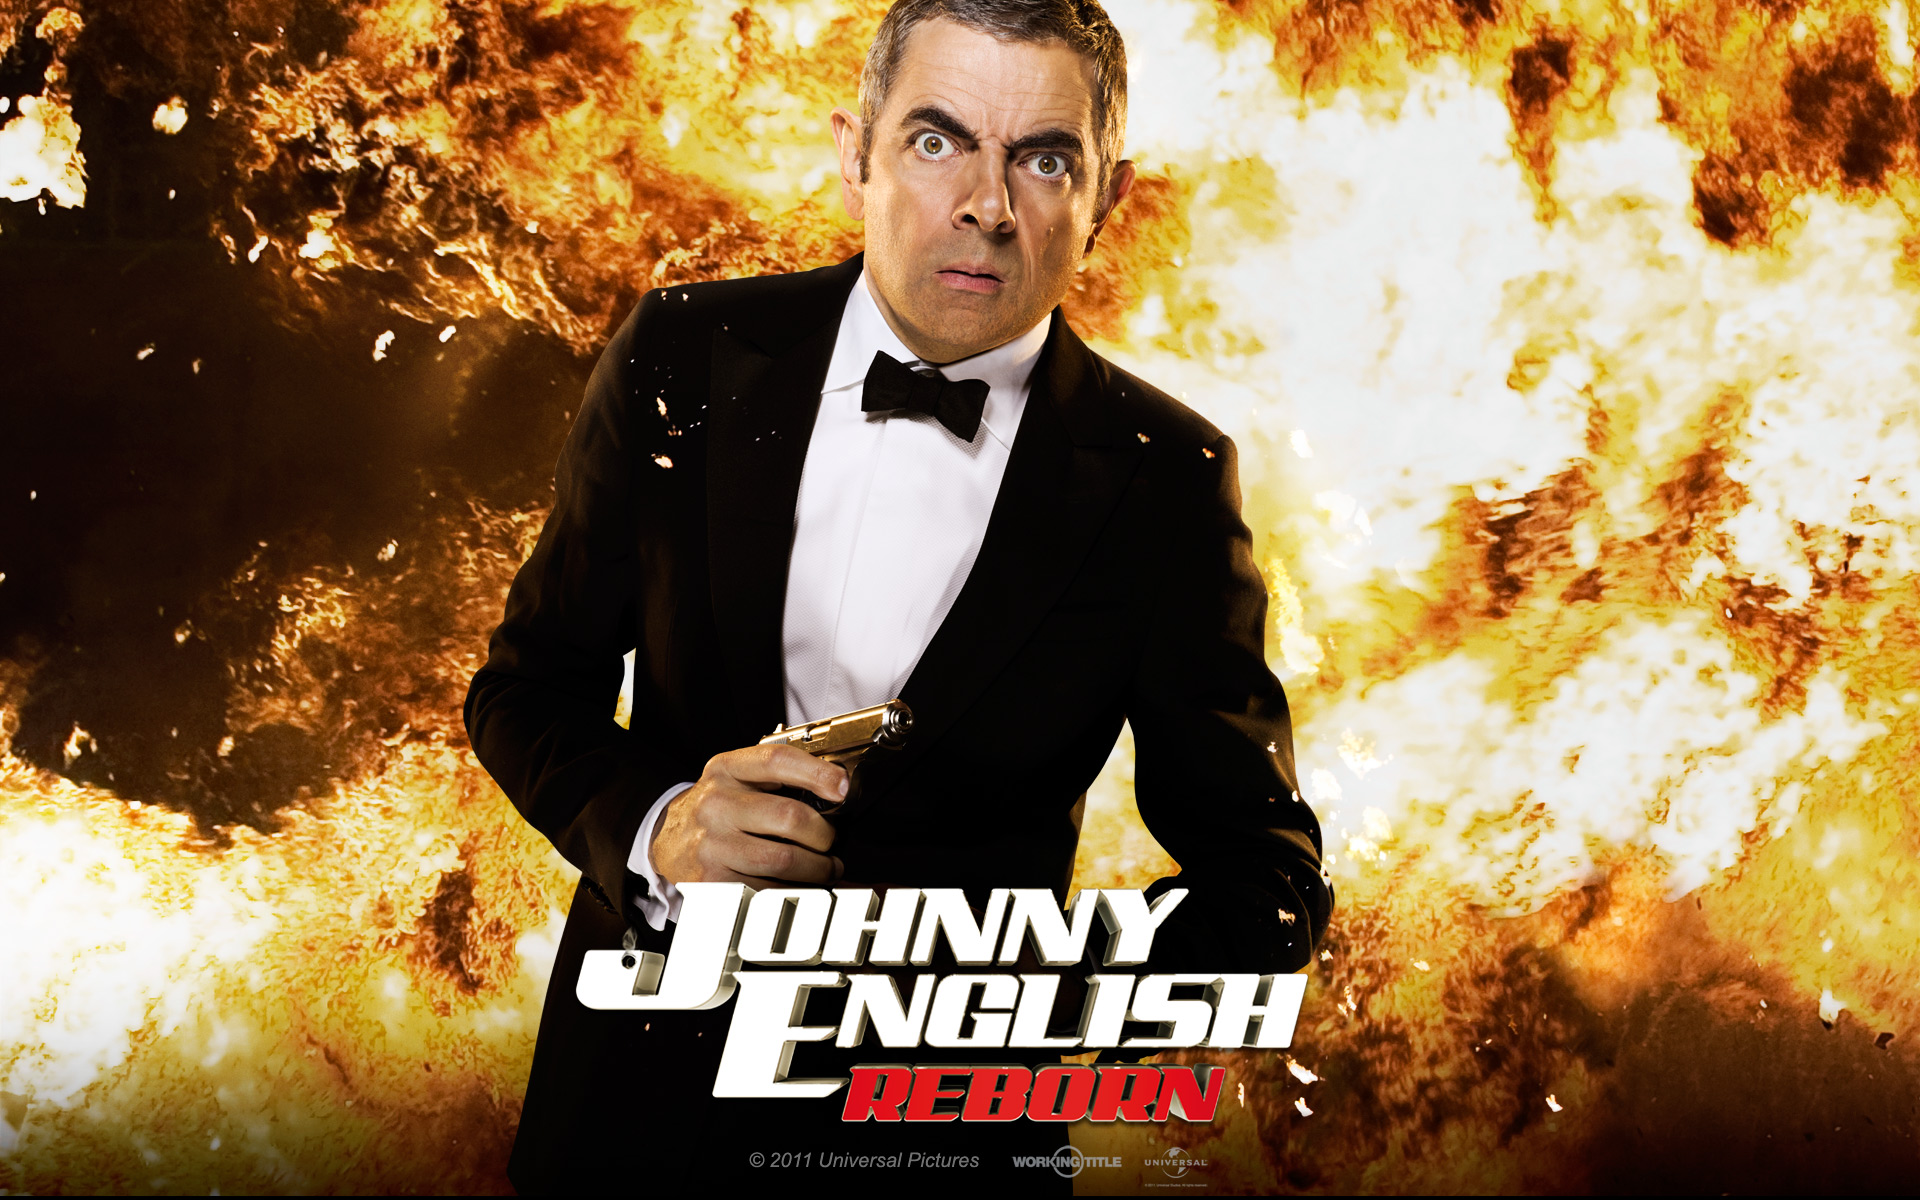 Джонни инглиш 3 в хорошем. Агент Джонни Инглиш перезагрузка - Johnny English Reborn (2011). Роуэн Аткинсон агент Джонни Инглиш. Роуэн Аткинсон агент Джонни Инглиш 3. Агент Джонни Инглиш: перезагрузка Постер.